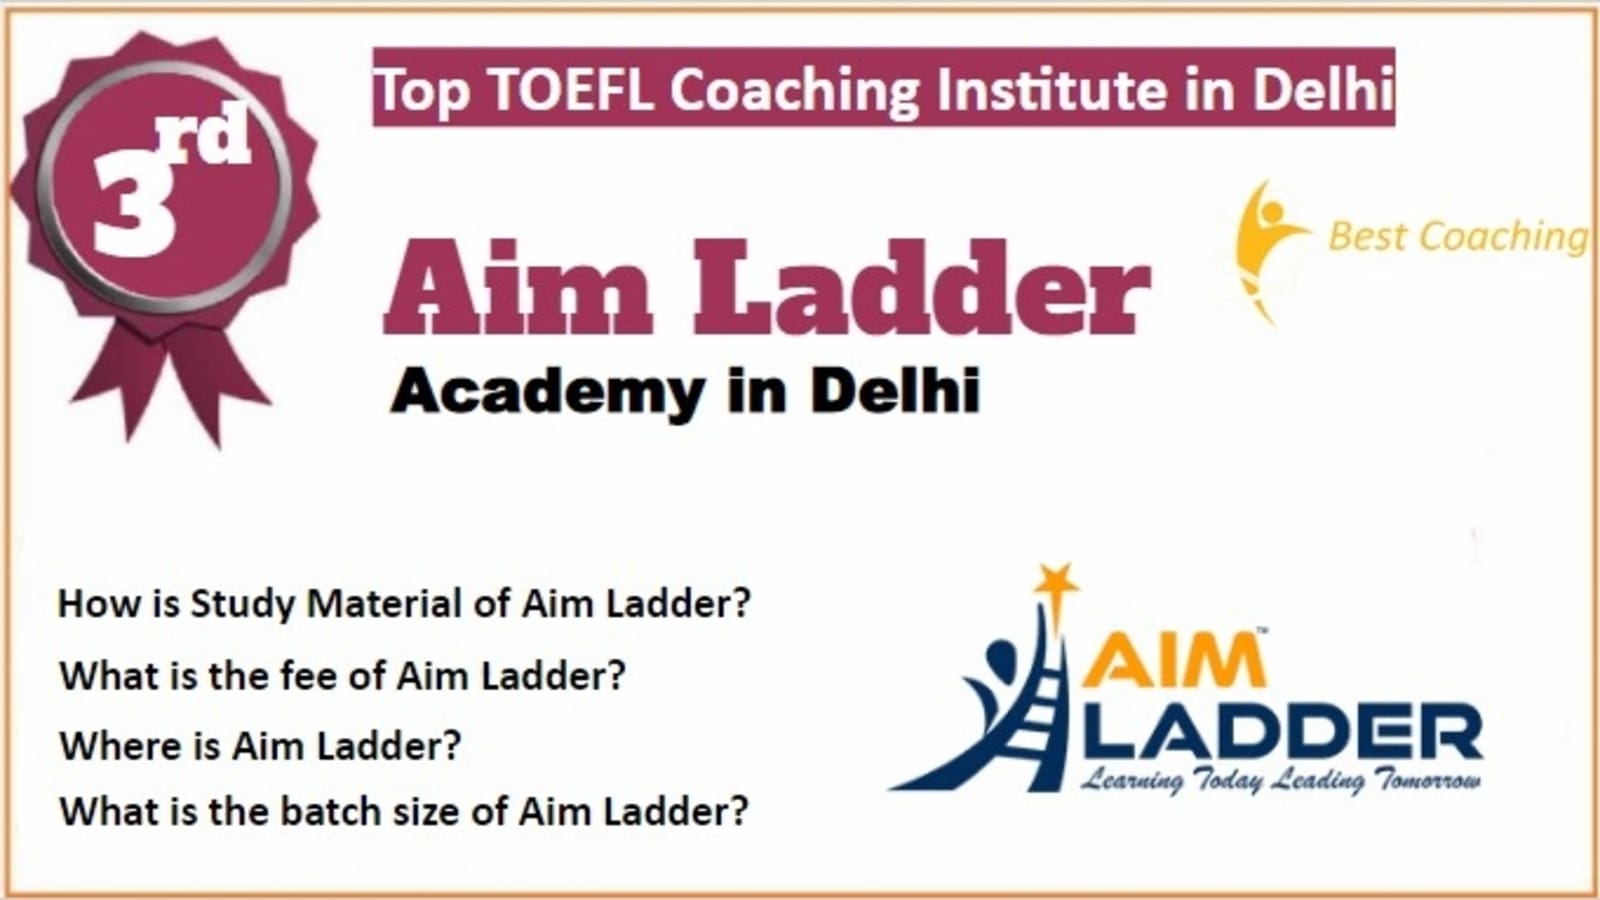 Rank 3 Best TOEFL Coaching in Delhi